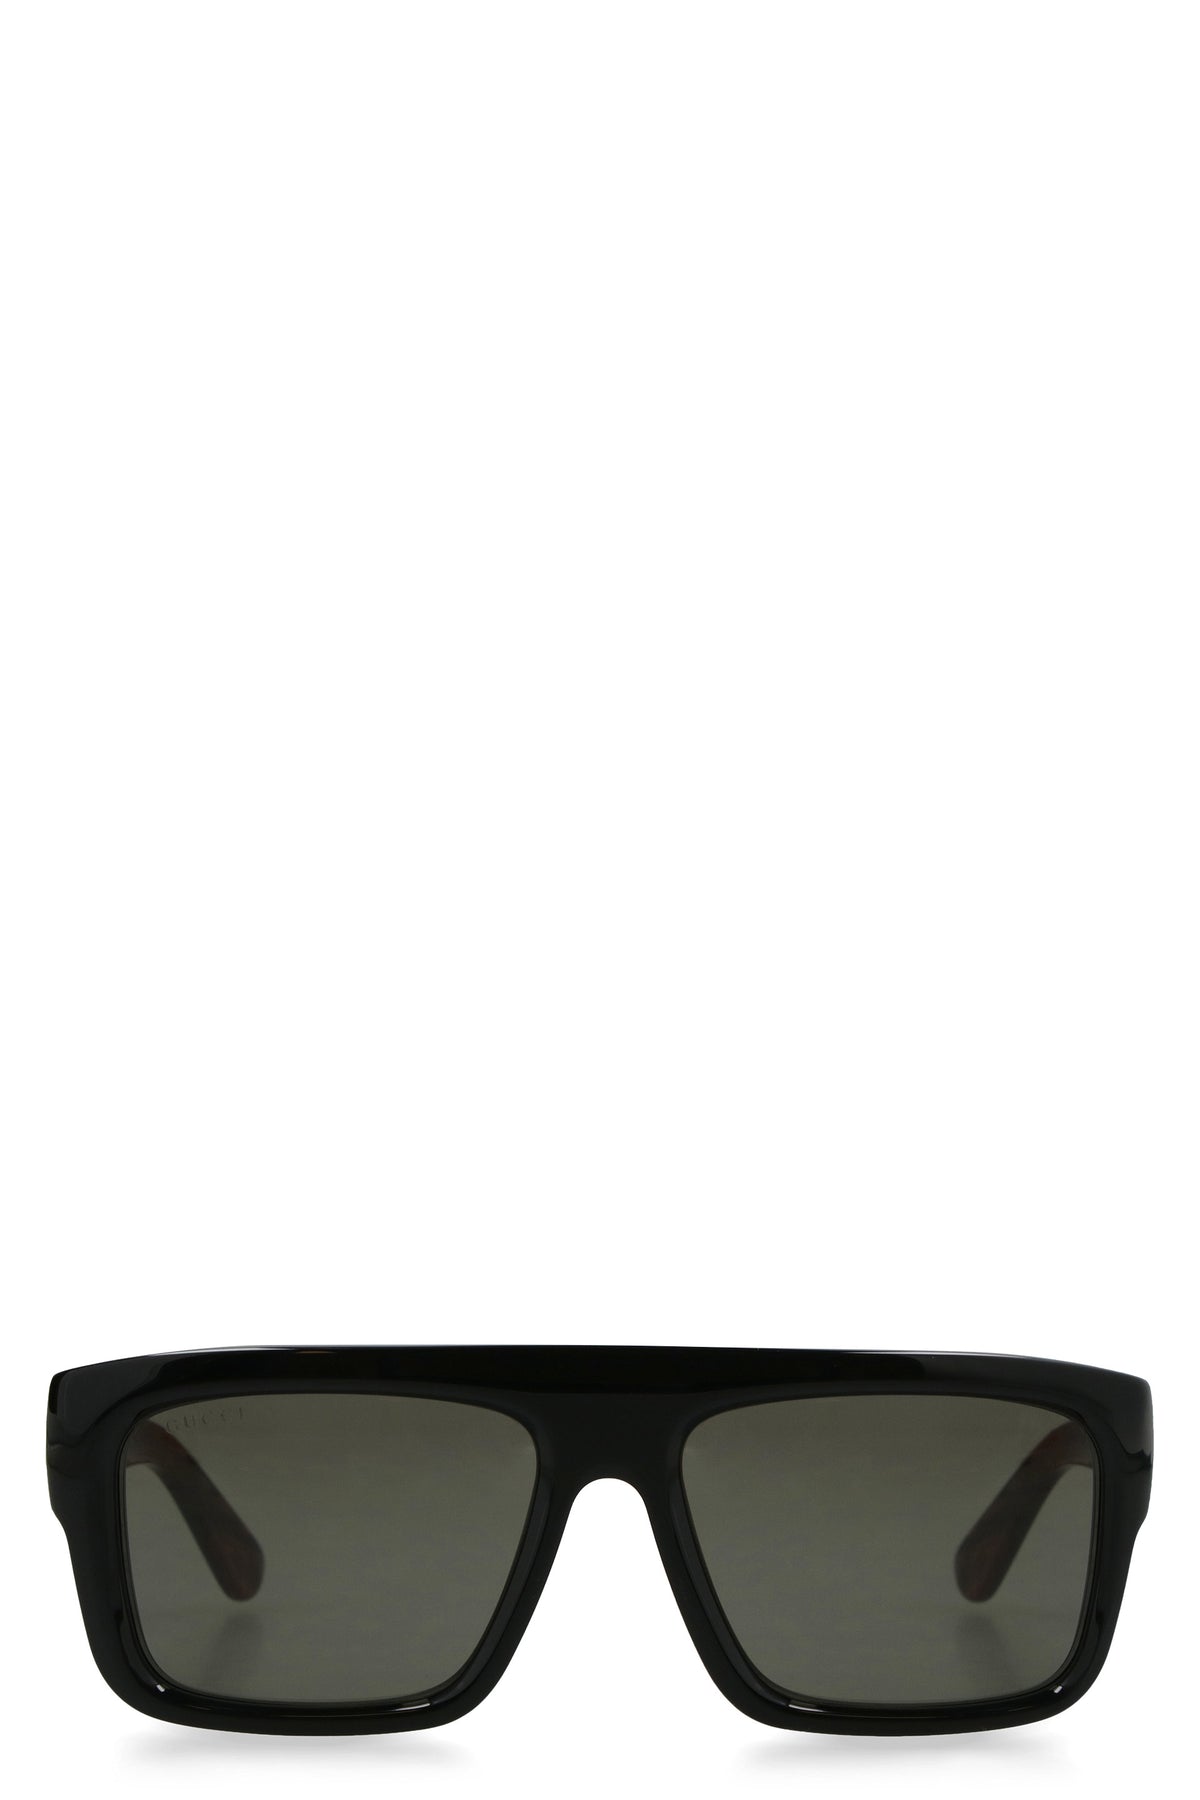 Gucci Rectangular Frame Sunglasses Black/Gold-tone (755254 J0740